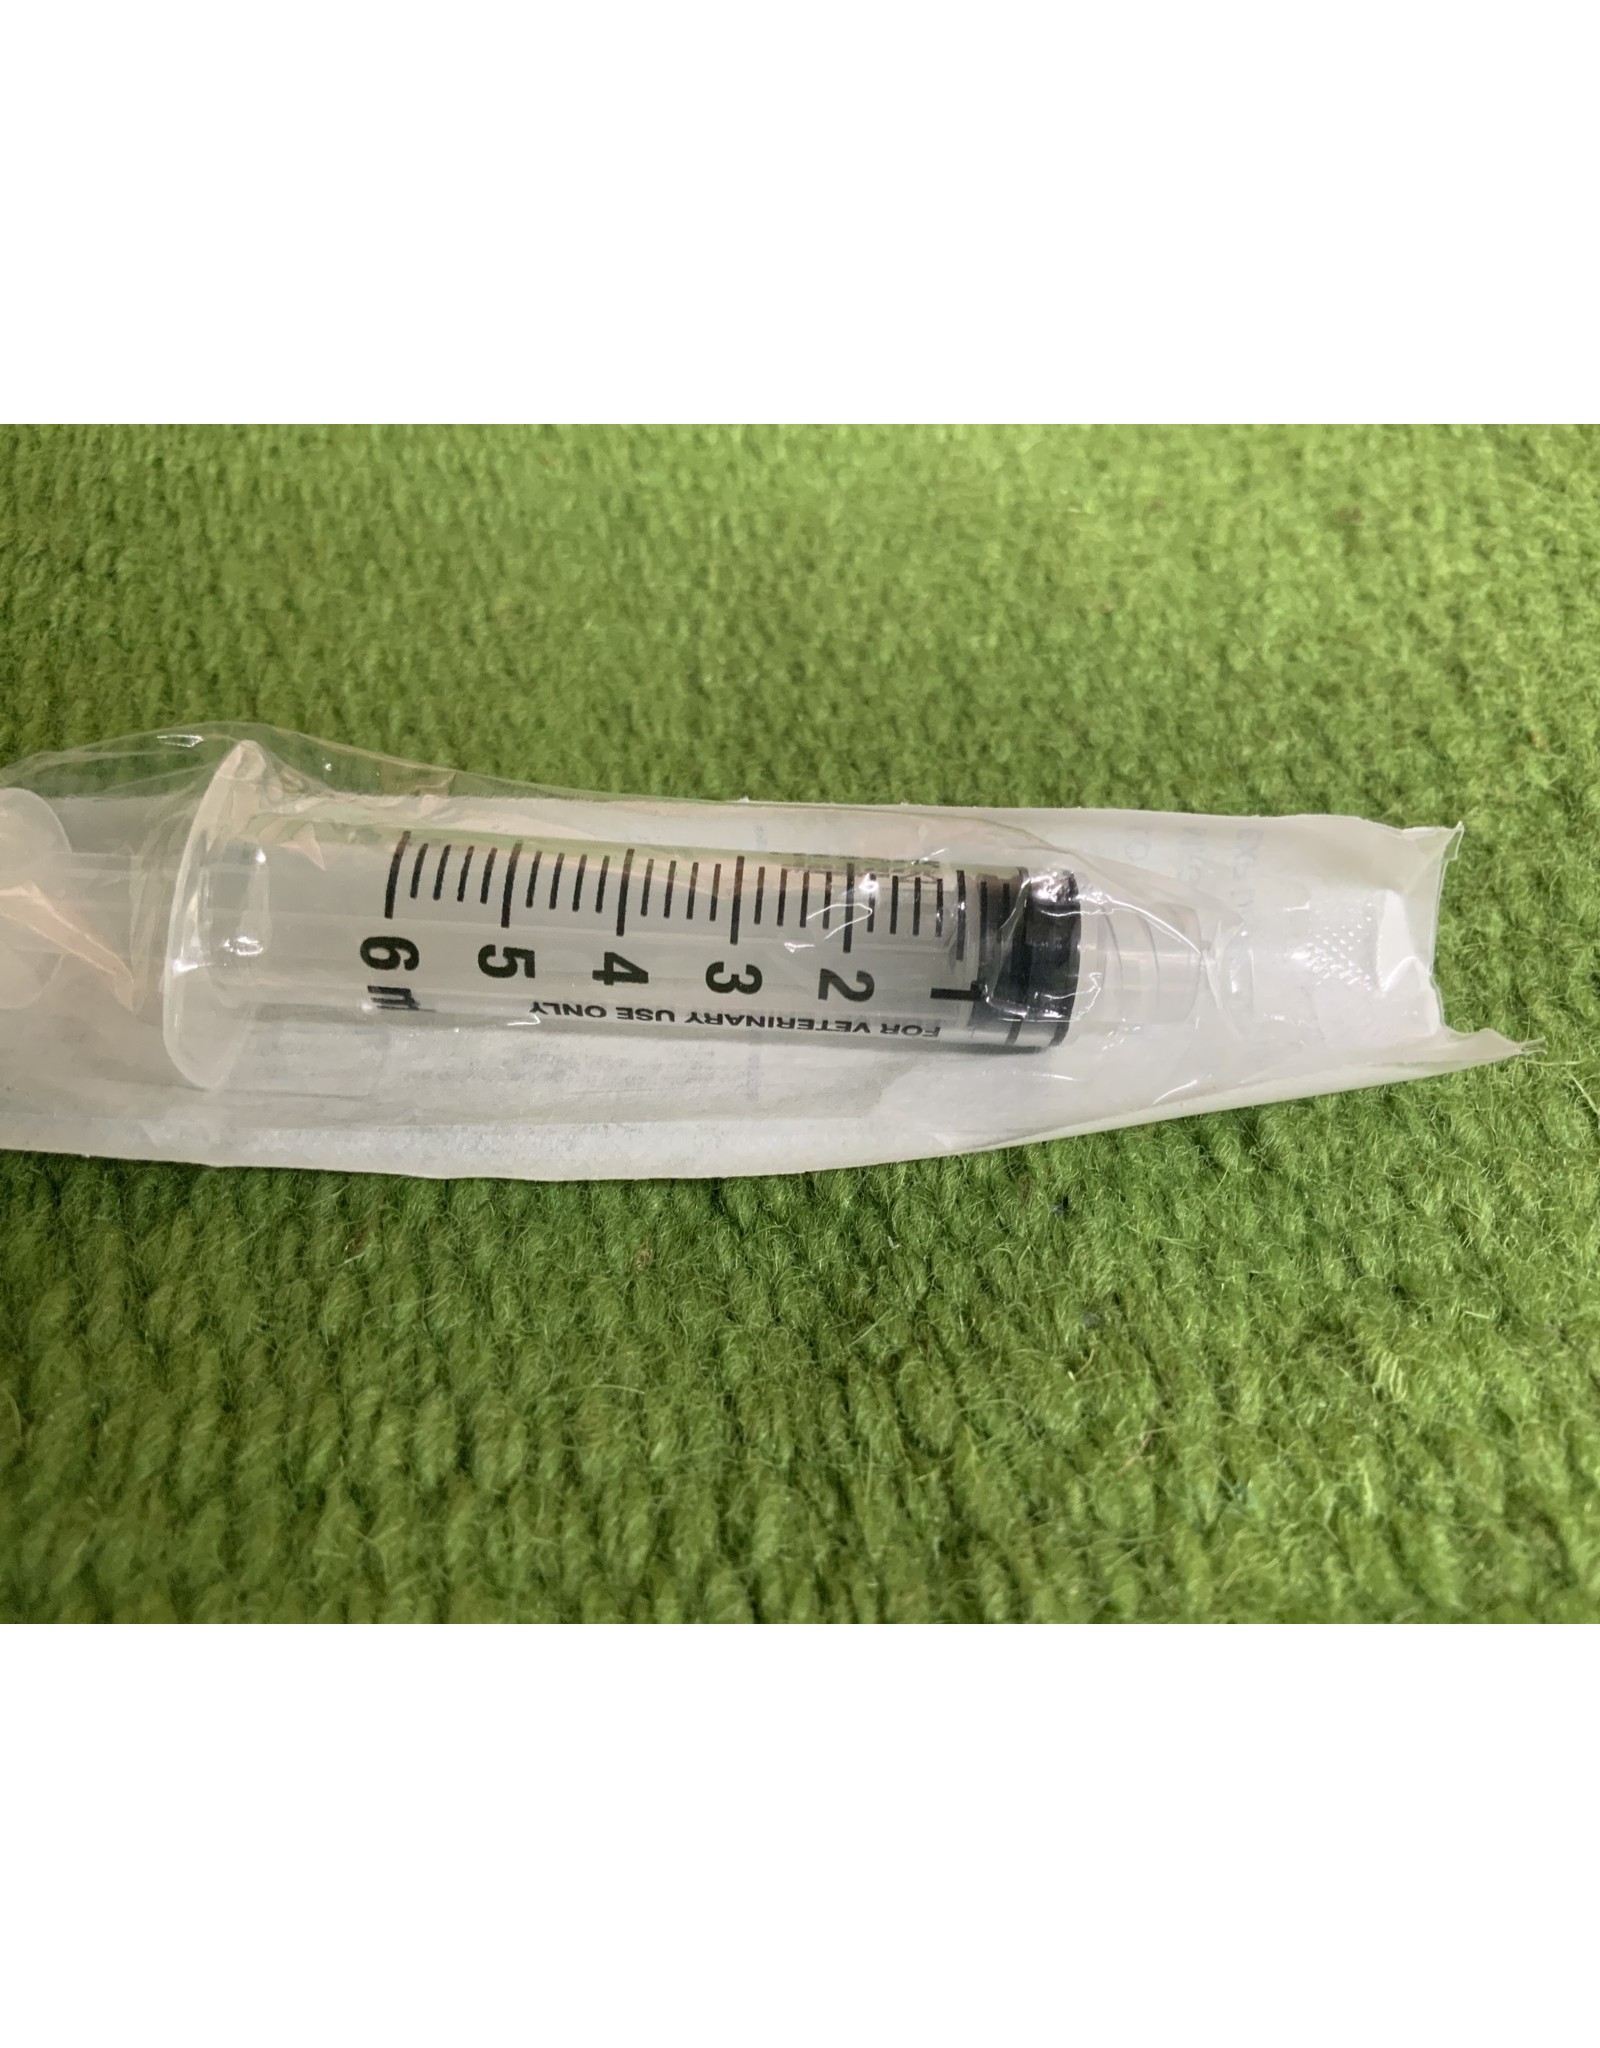 Ideal Syringe* 6 cc Luer Lock Disposable Ideal 100pk 034-076 Full Box